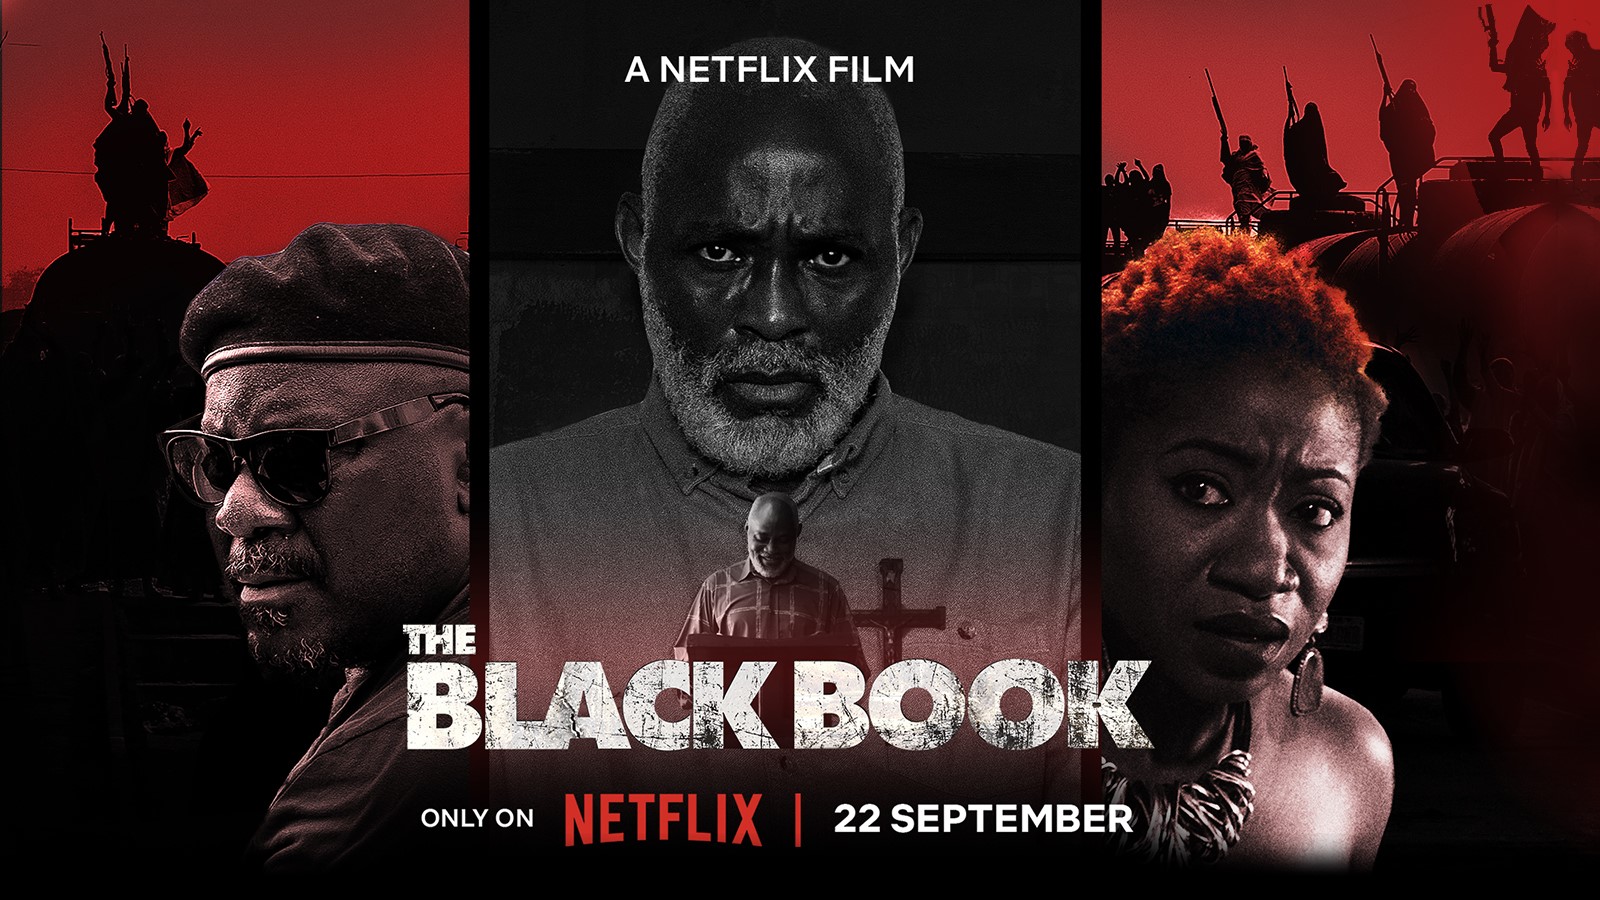 Does Netflix have black books?